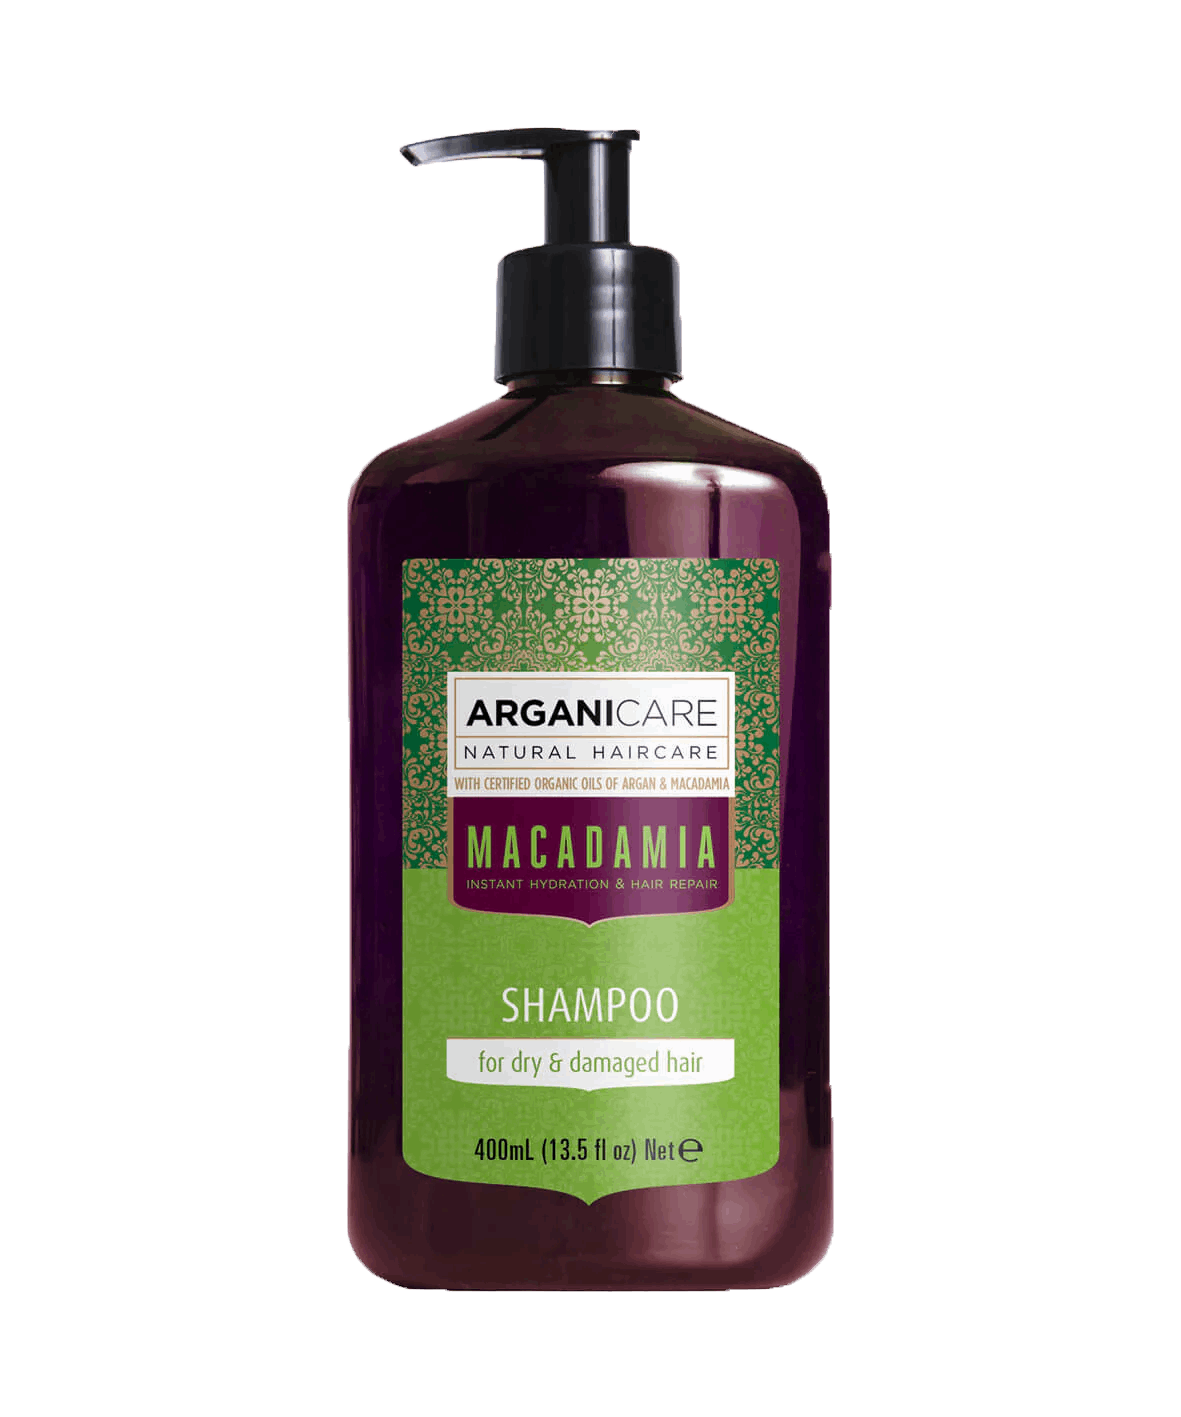 ARGANICARE Macadamia Shampoo for Dry and Damaged Hair | 400ml